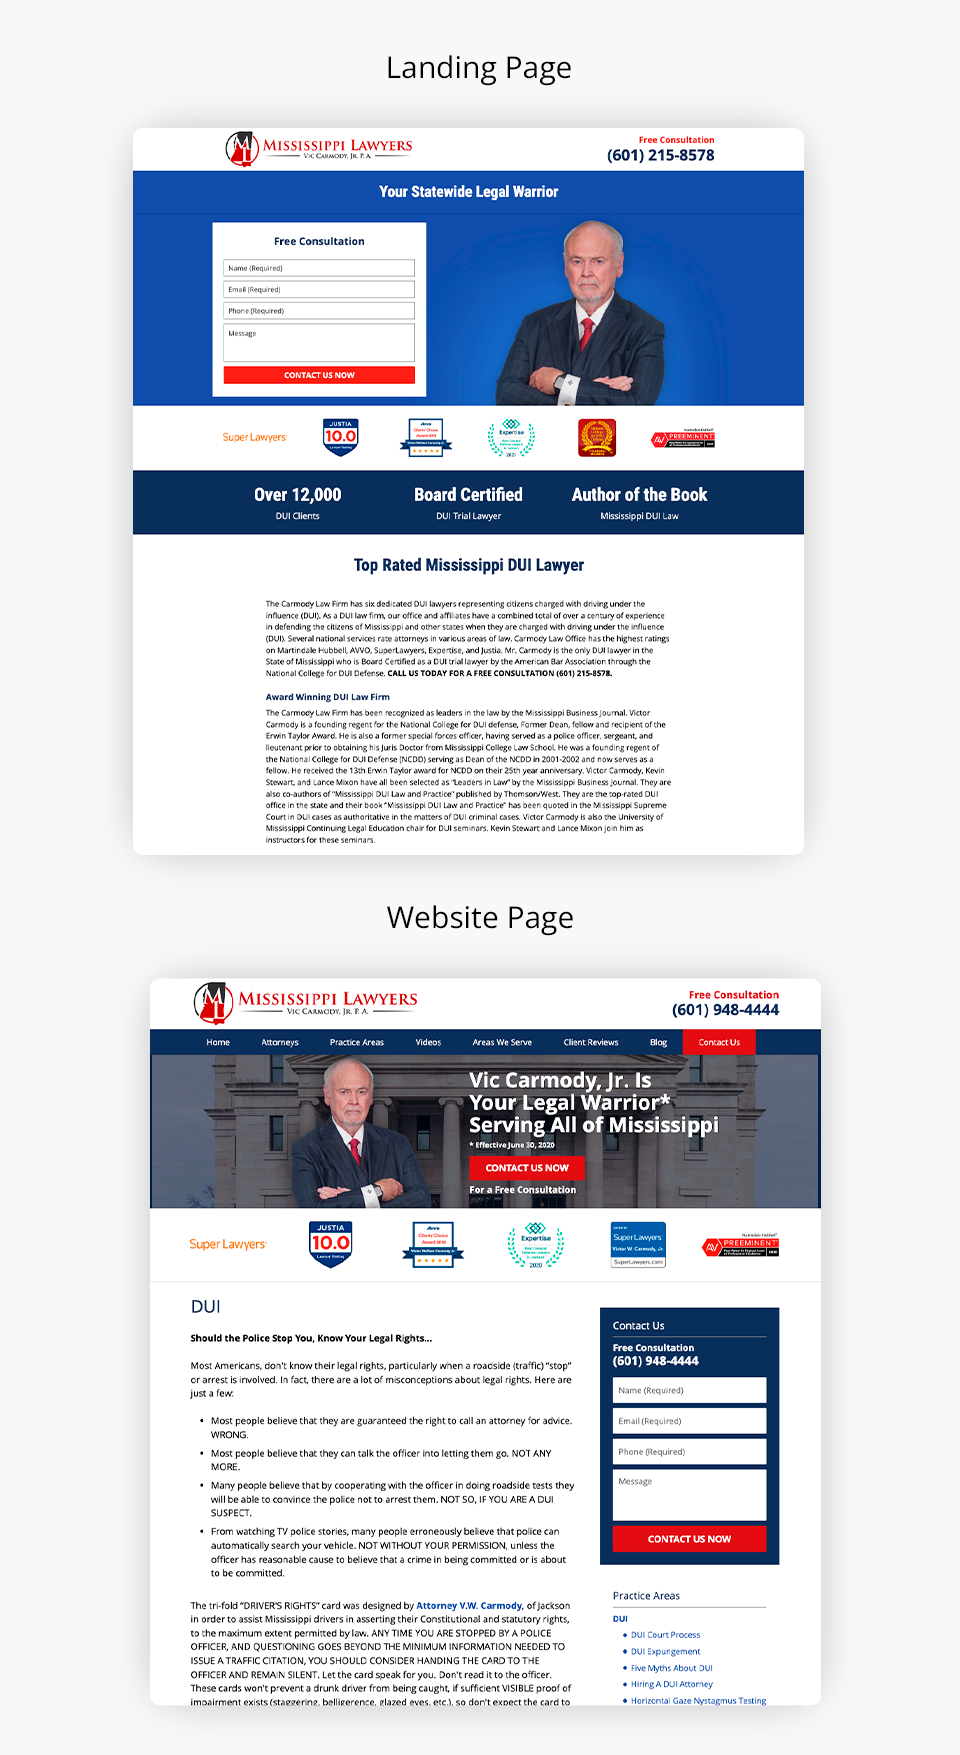 Landing Page vs Website Image